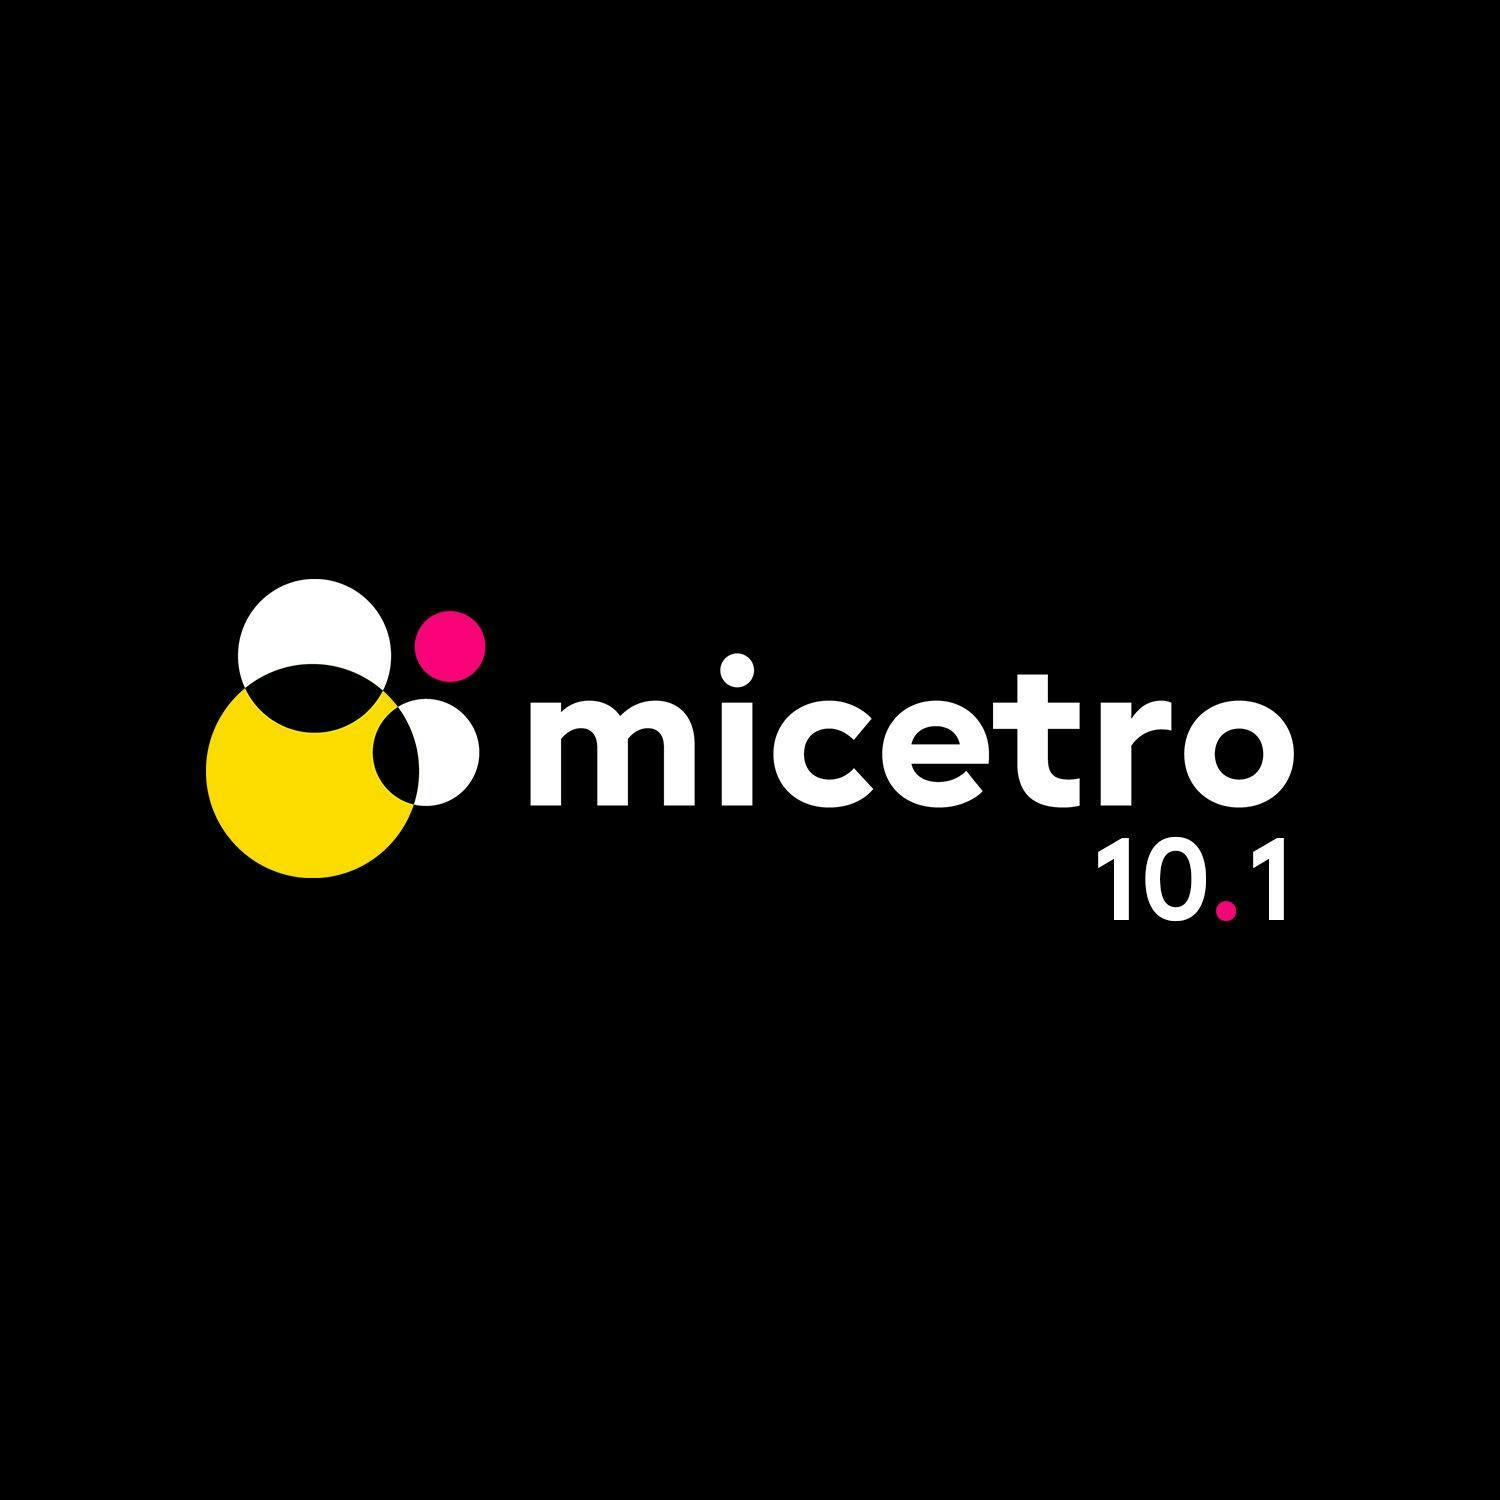 Micetro 10.1 Logo Square